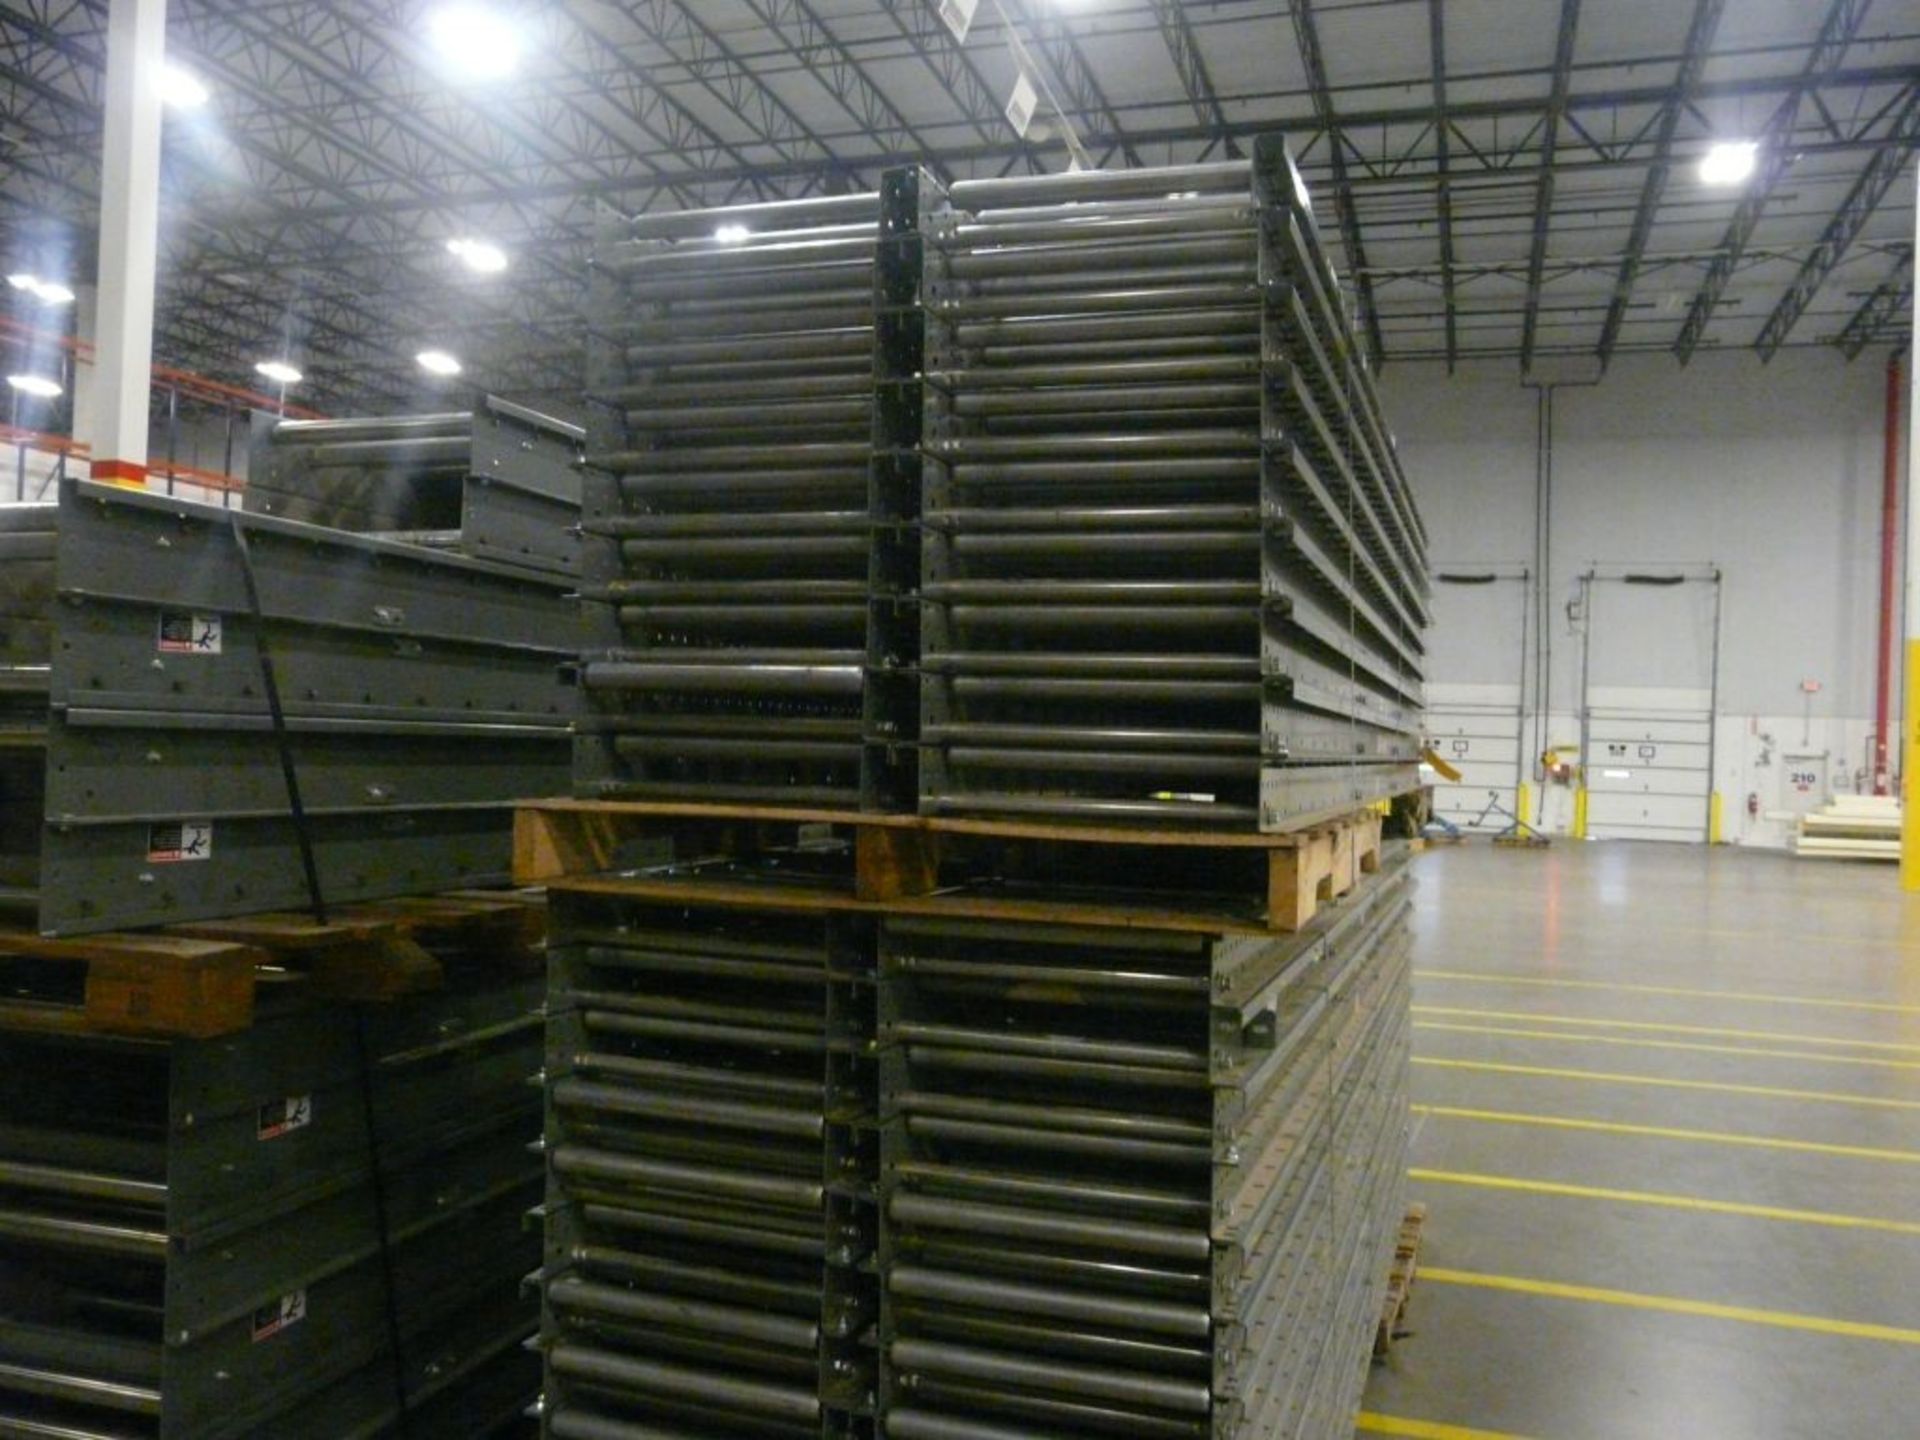 Lot of (26) 140 Belt Intermediate Conveyors - 12'L x 16"W; Tag: 223668 - $30 Lot Loading Fee - Image 2 of 3